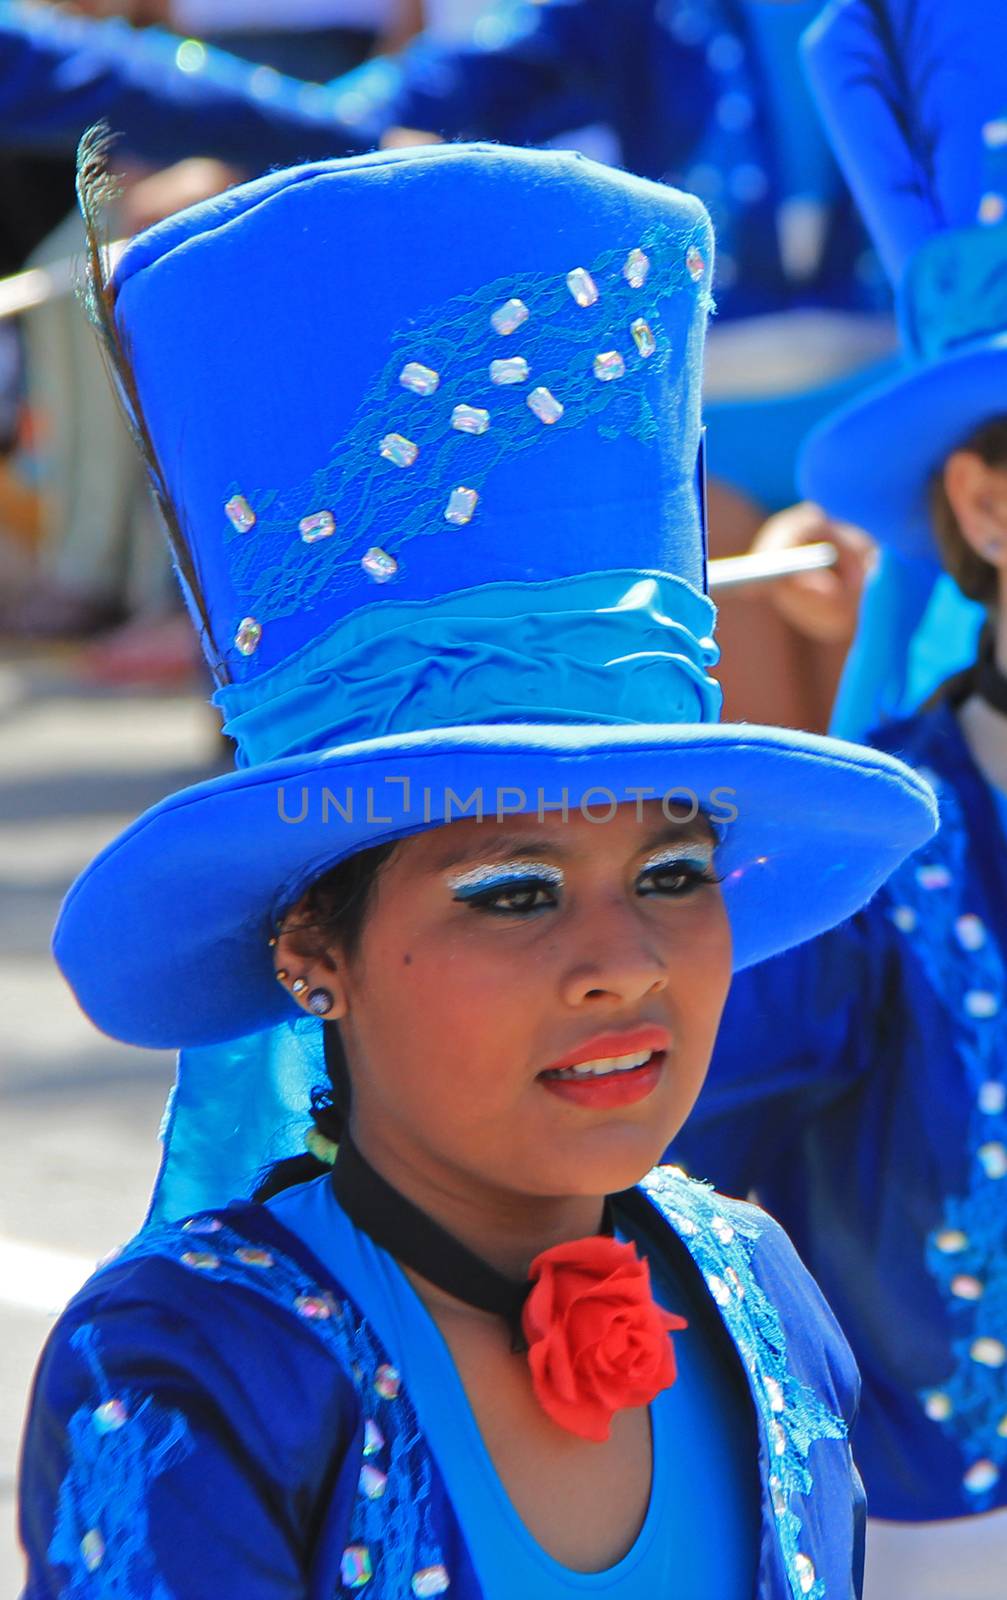 Carnaval Parade by photocdn39